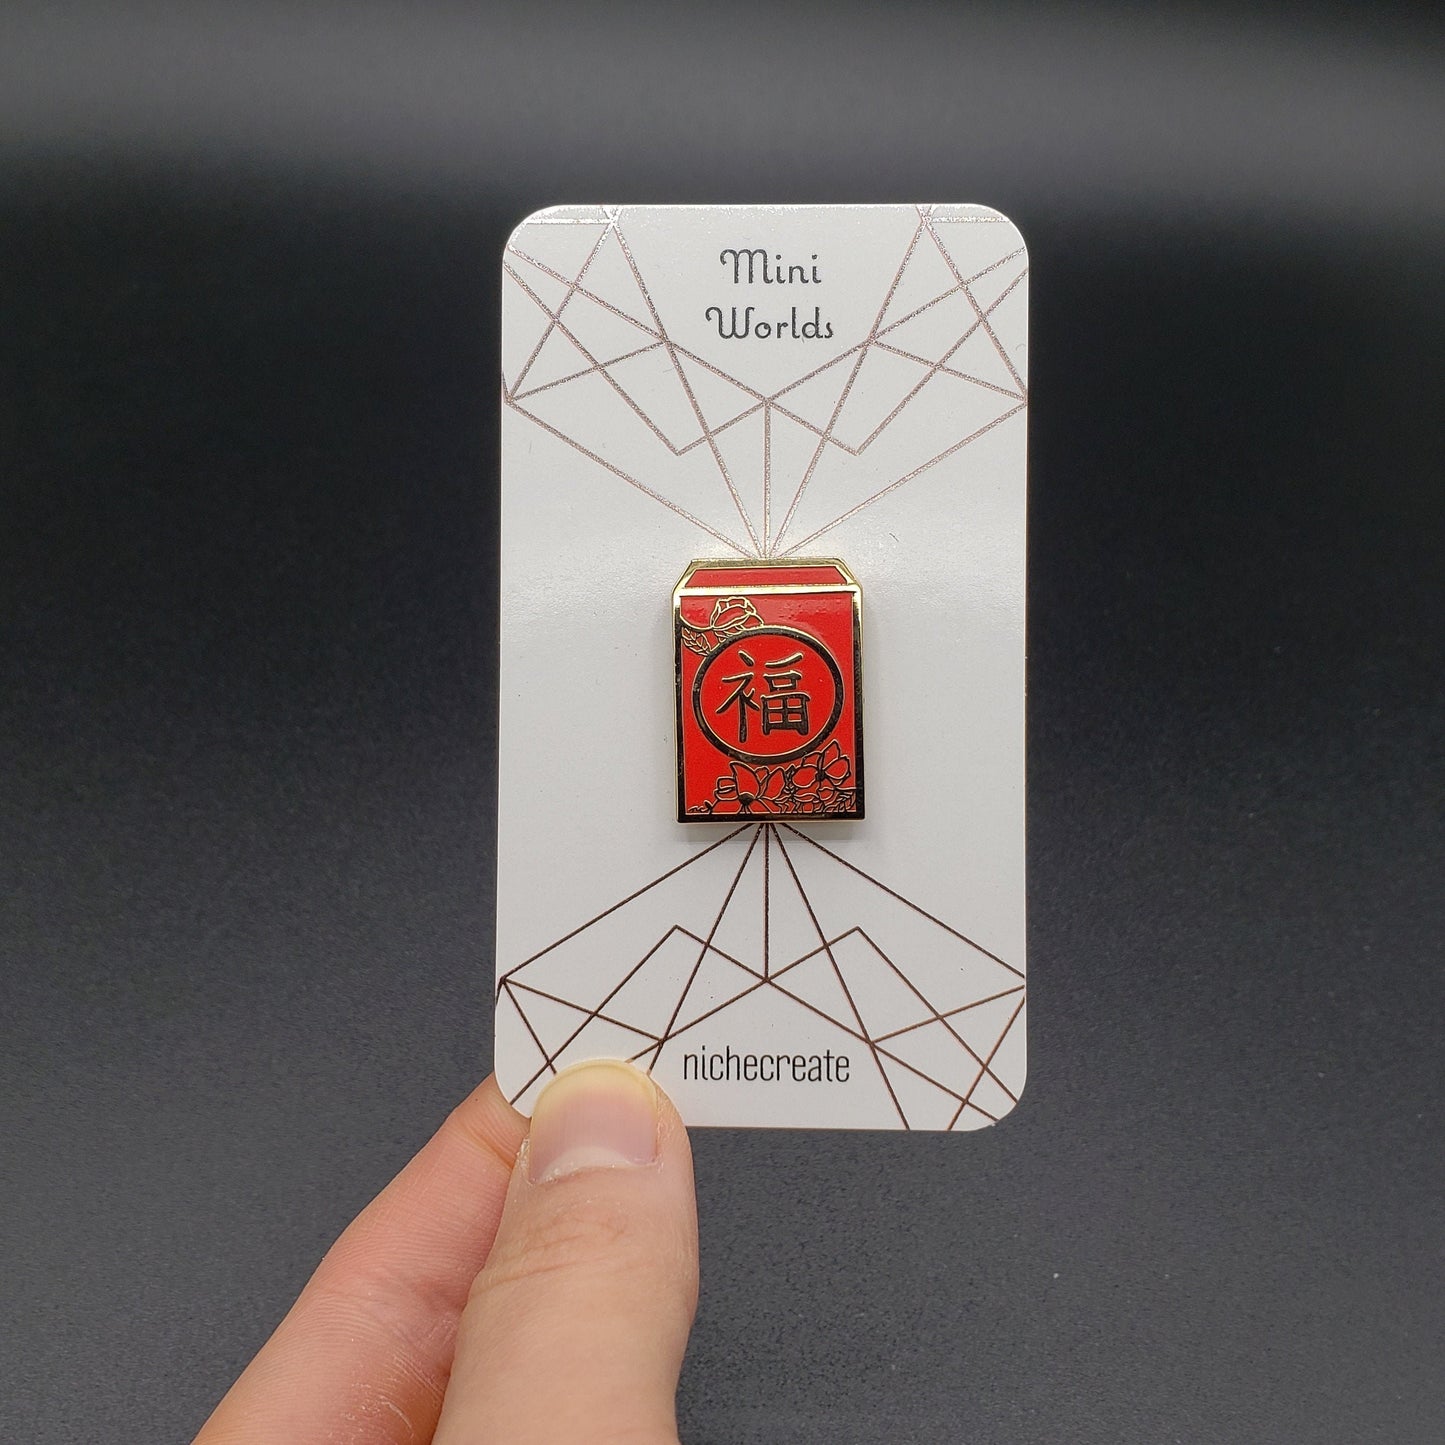 Red Envelope Gold Hard Enamel Pin/Keychains